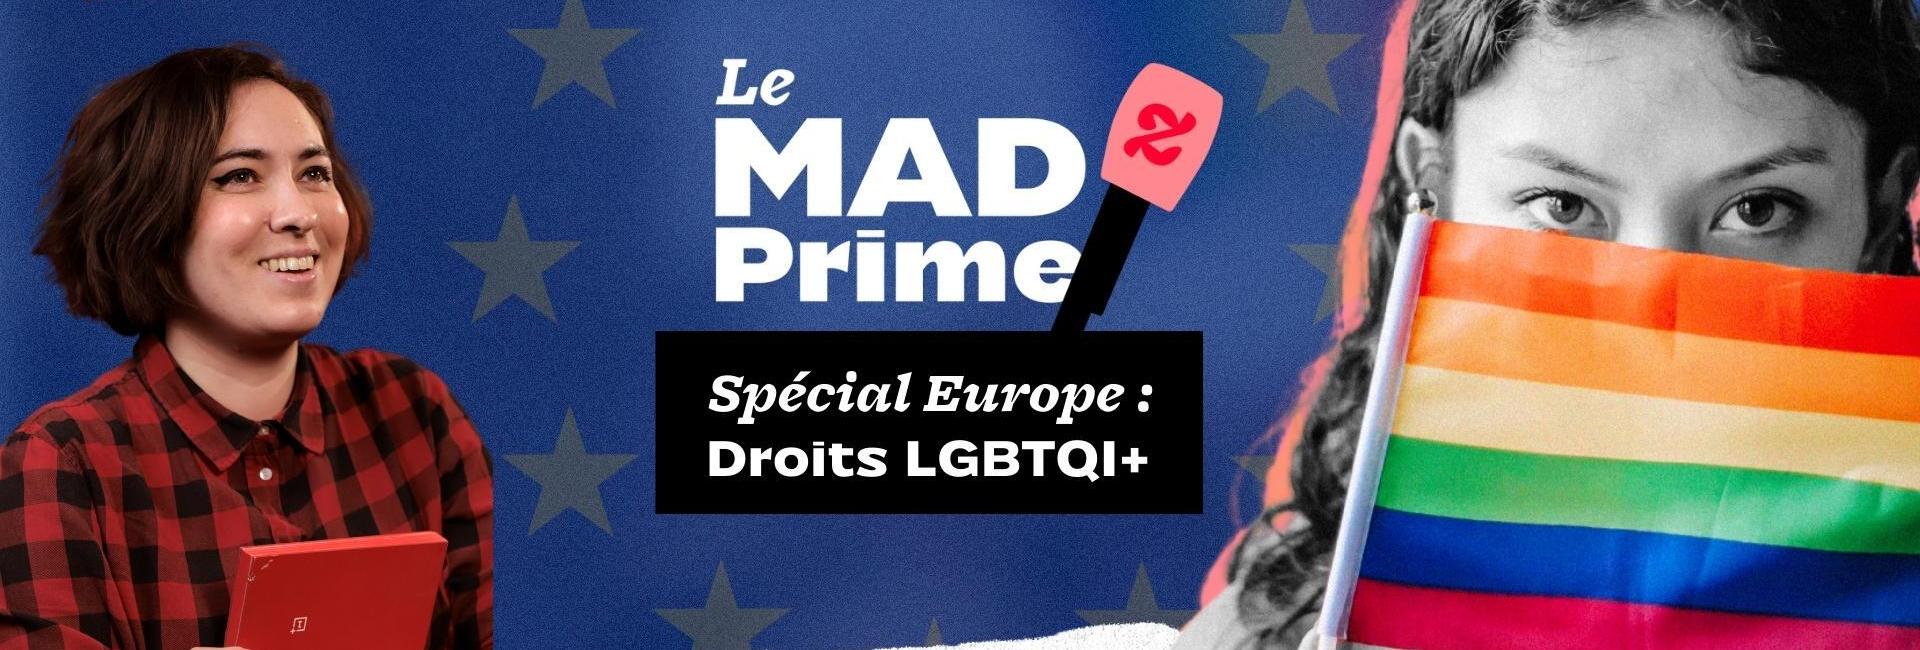 Madprime_europe_droitsLGBTQI+_H